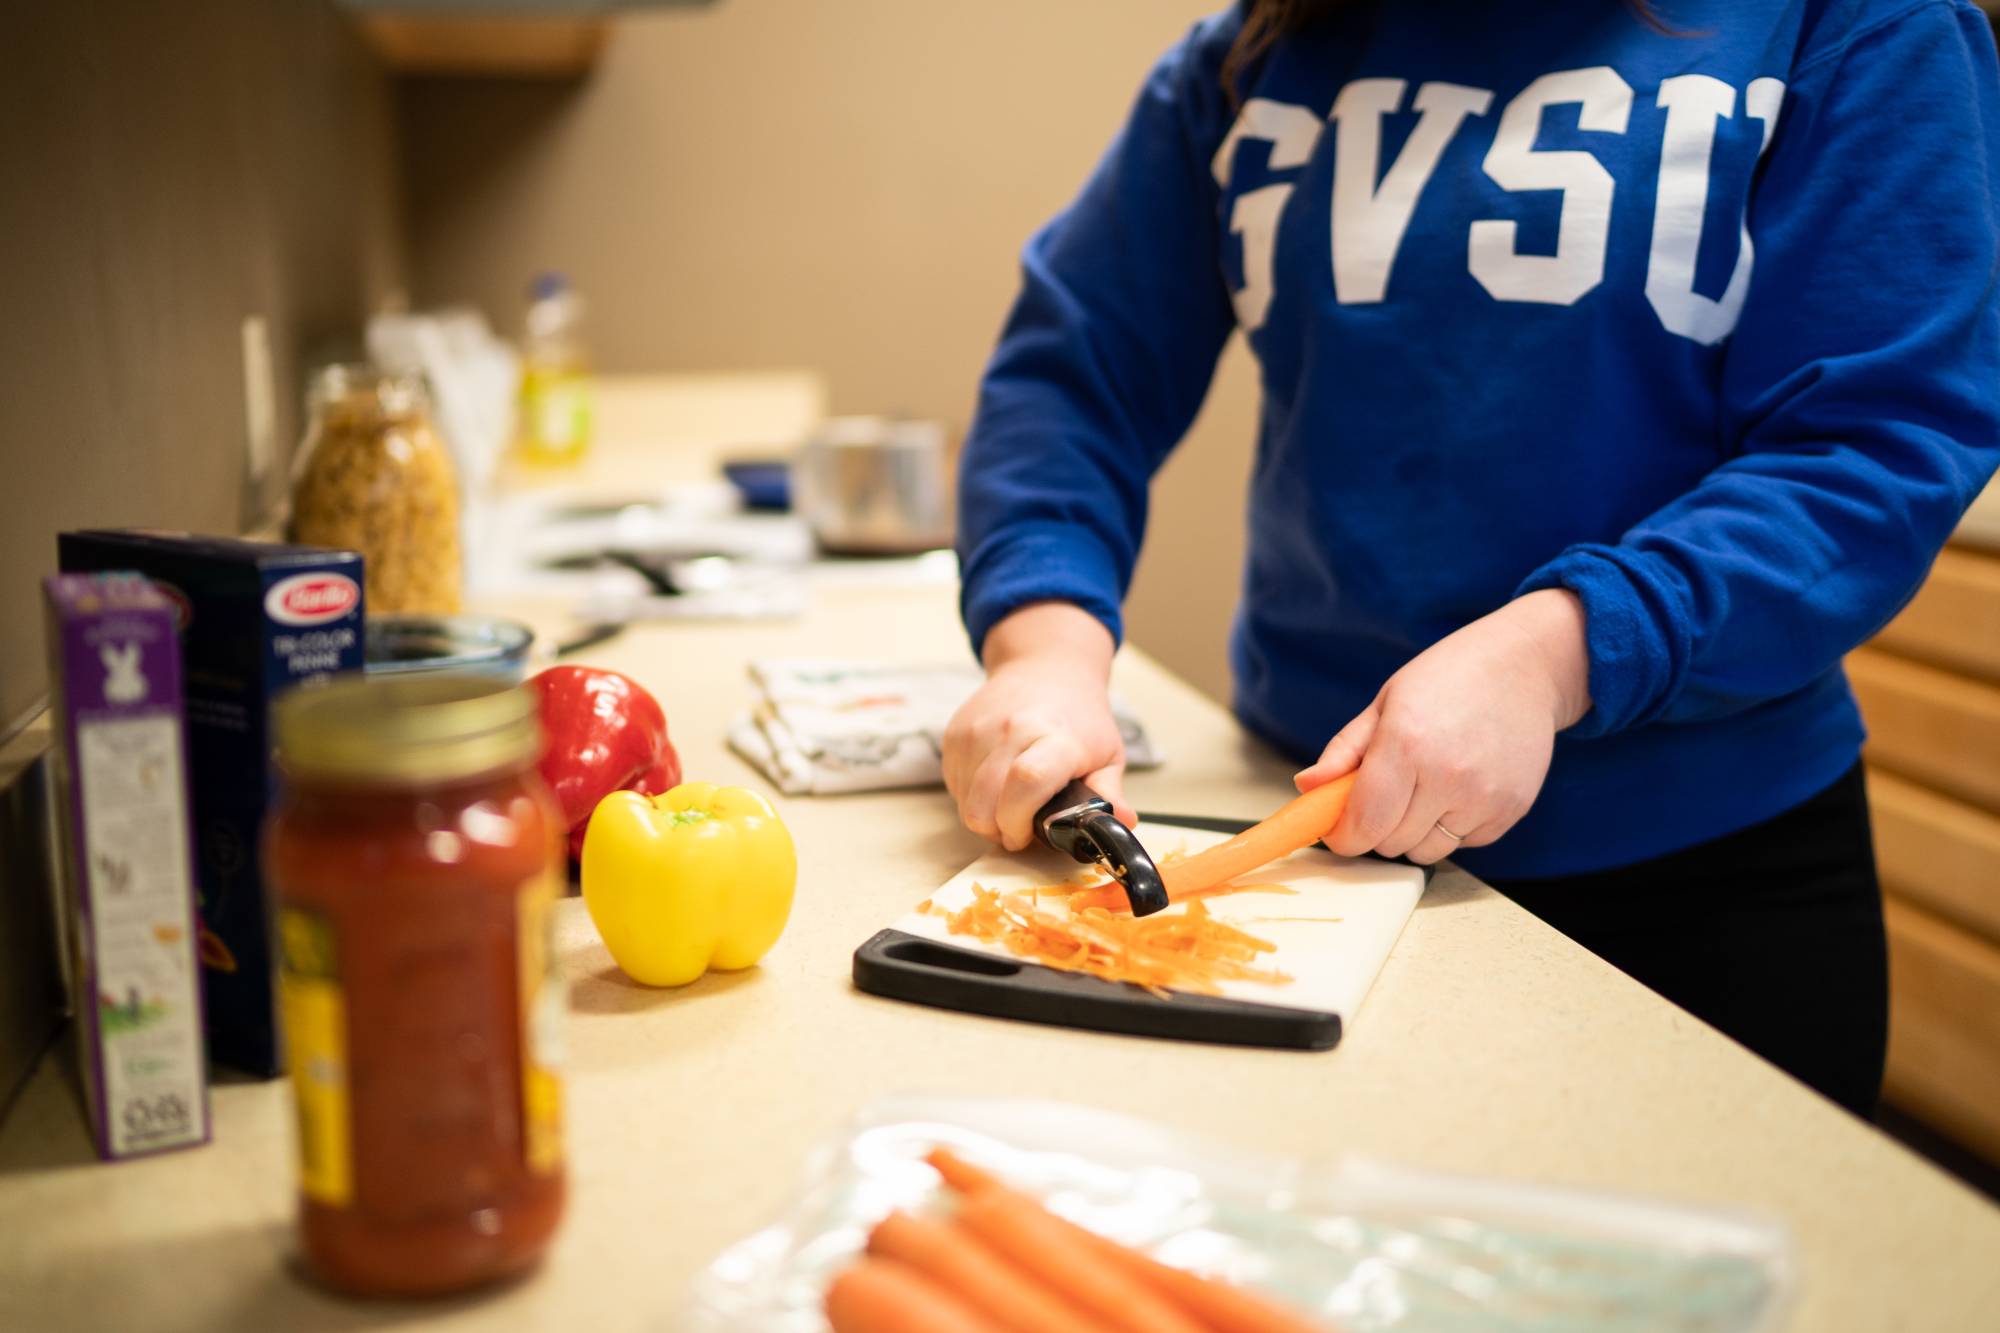 GVSU preparing food